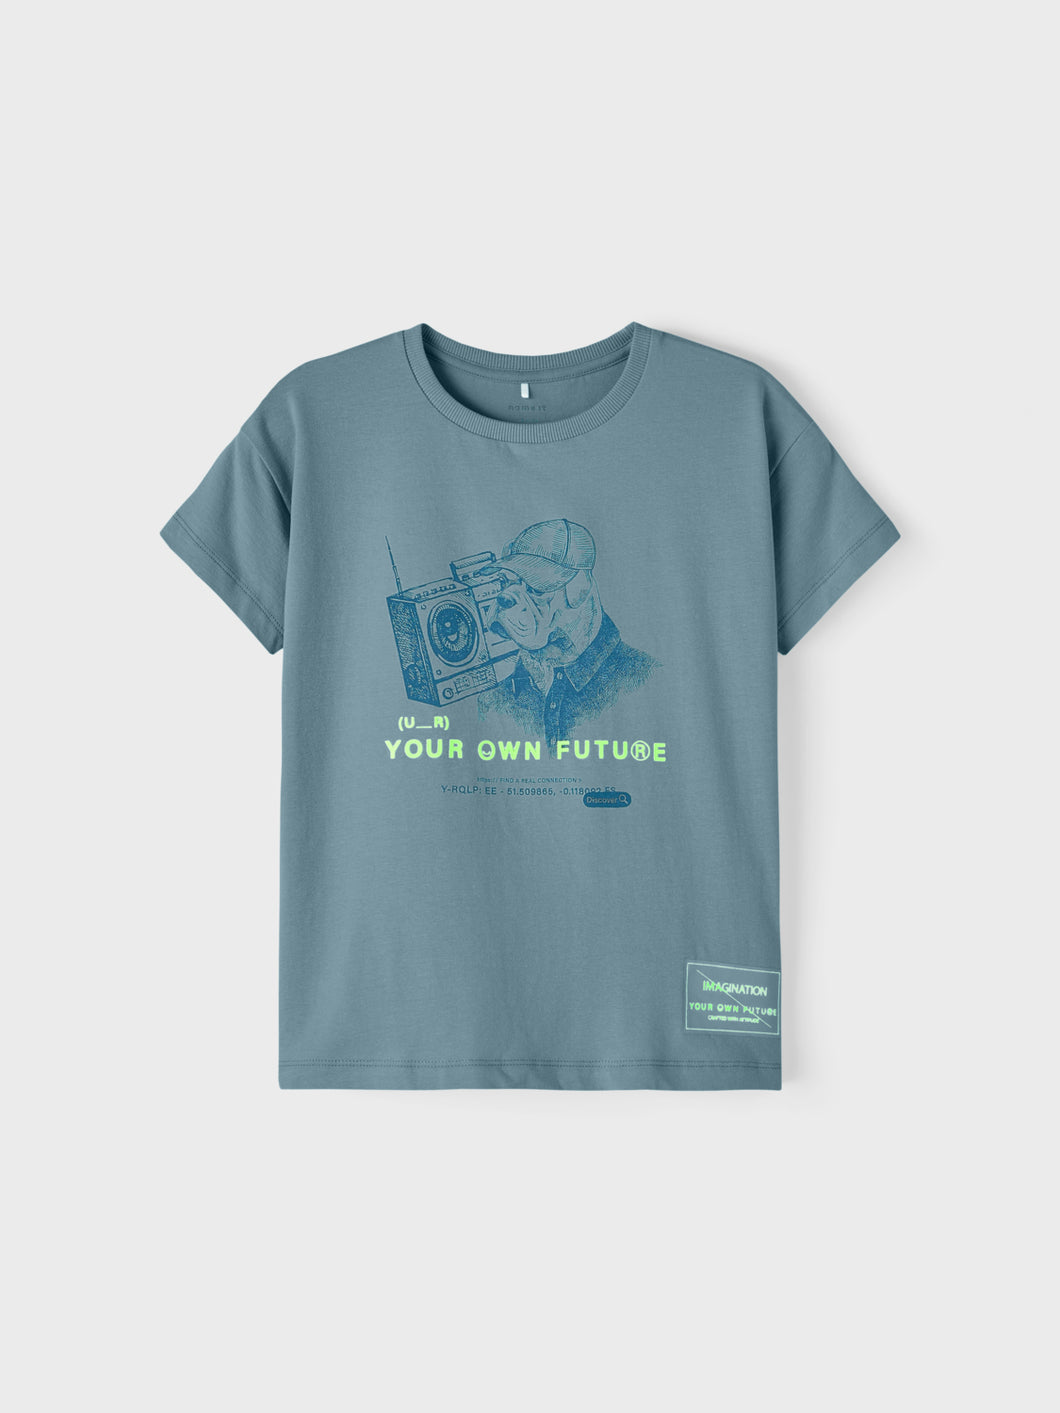 NKMJOLARS T-Shirts & Tops - Smoke Blue